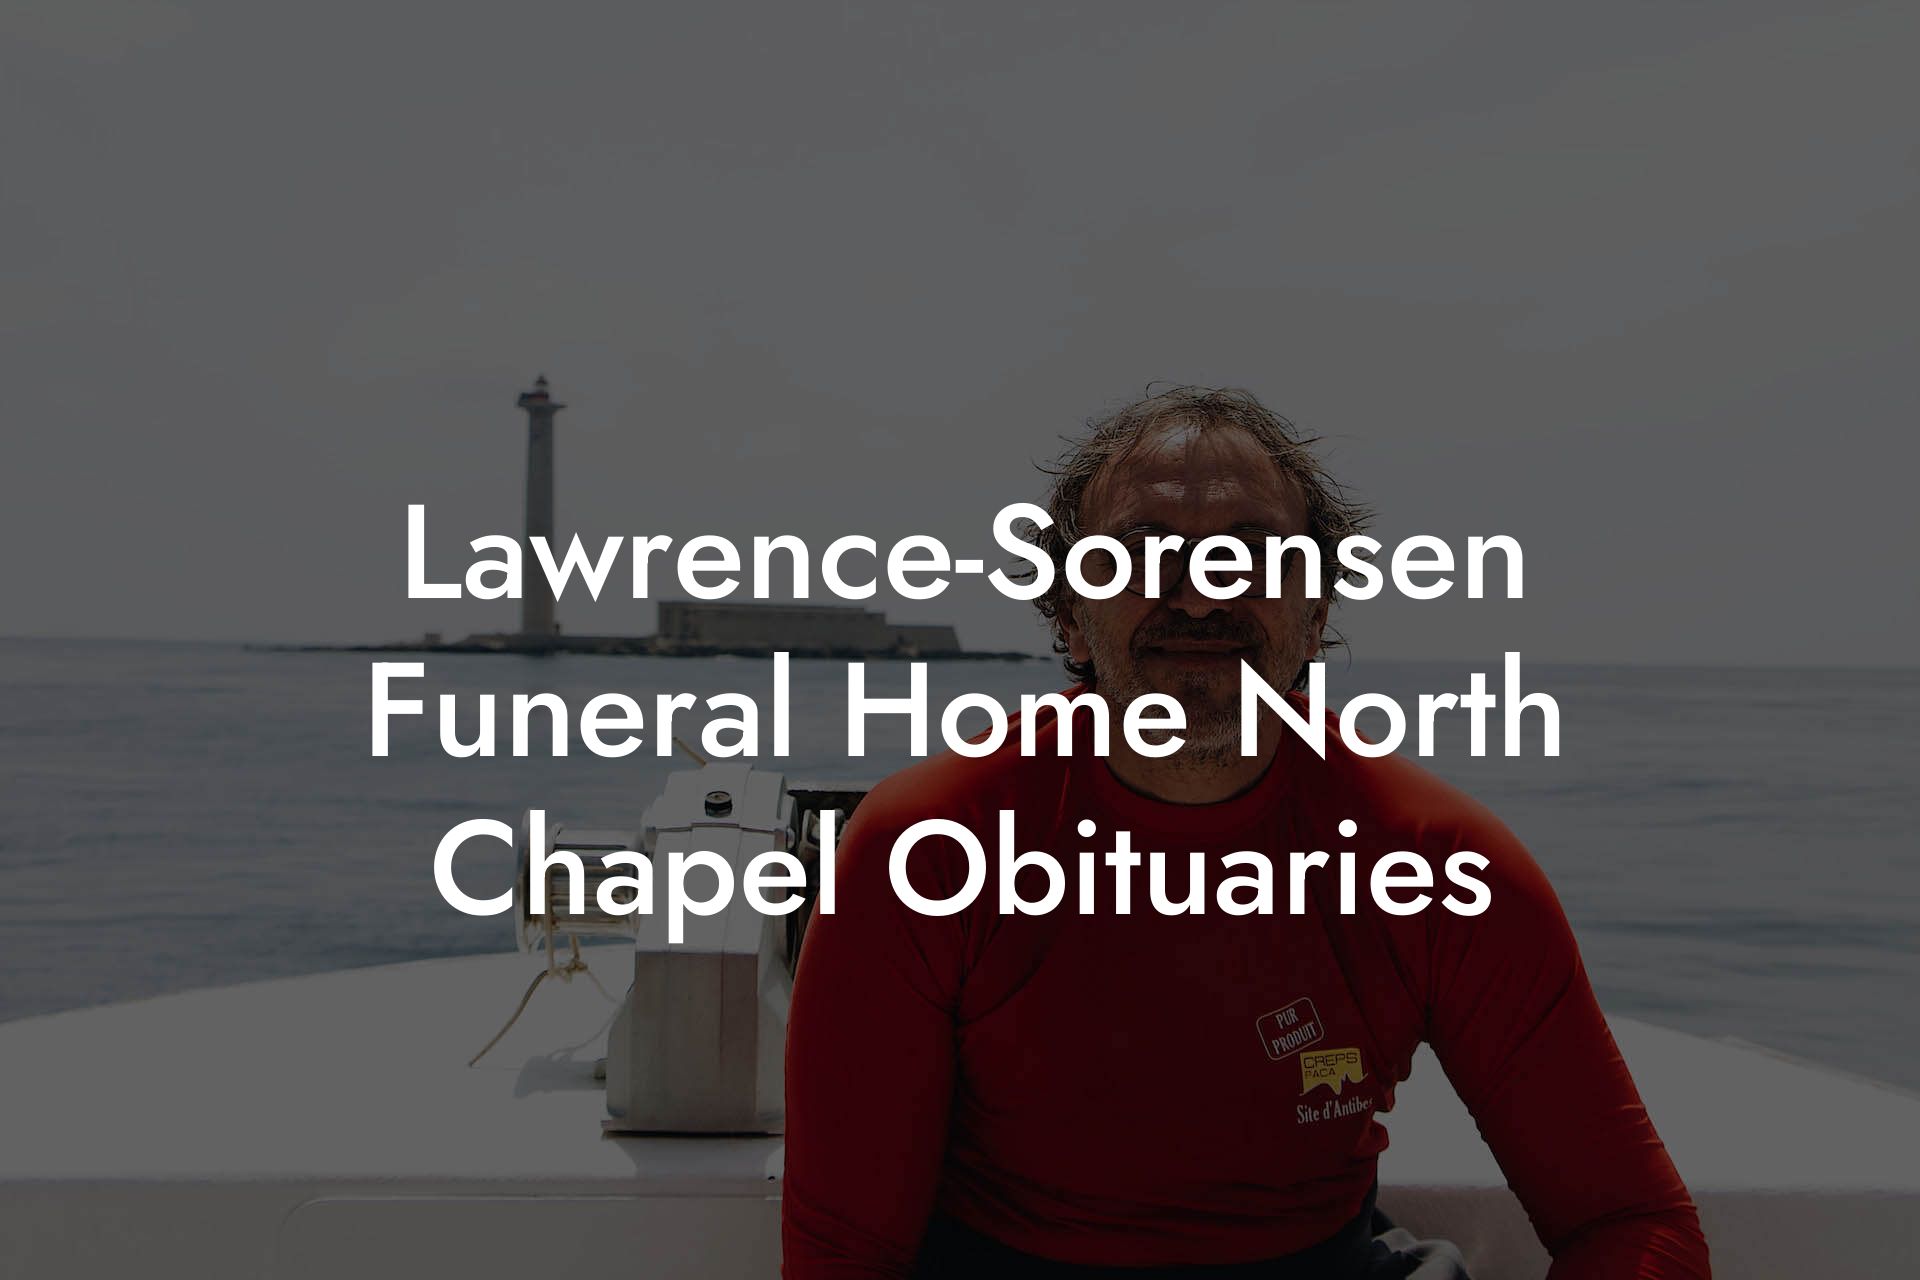 Lawrence-Sorensen Funeral Home North Chapel Obituaries